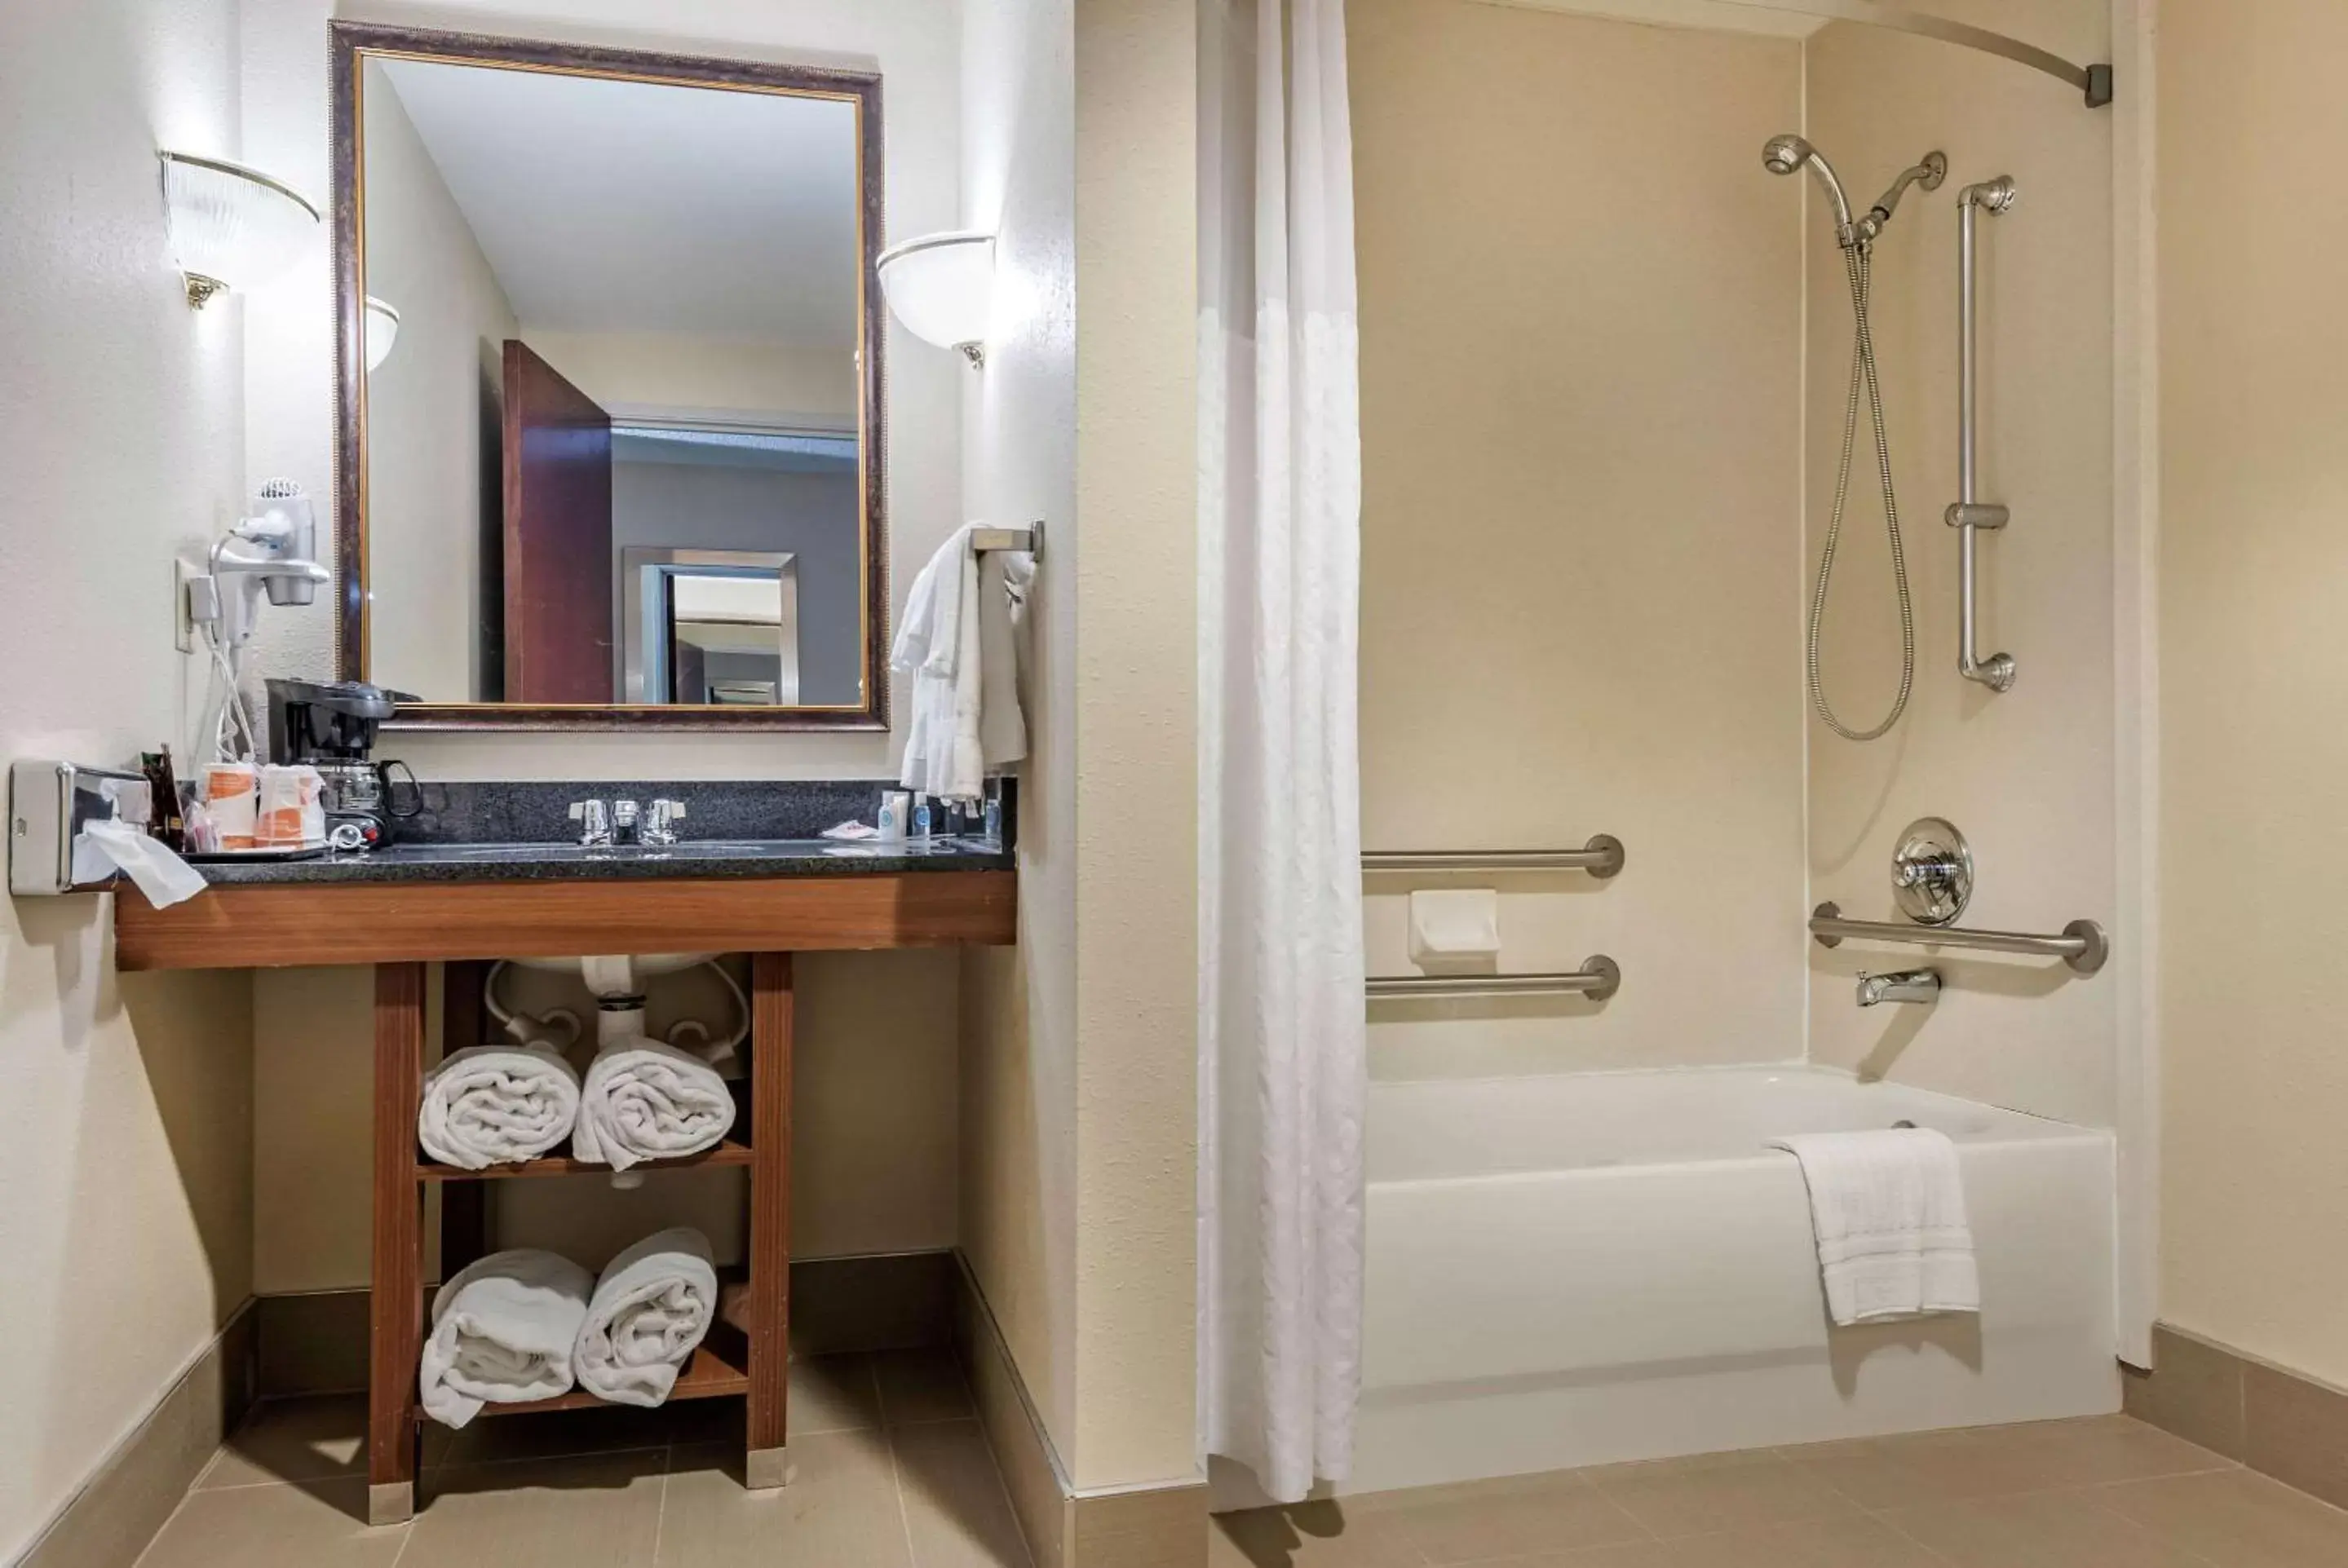 Photo of the whole room, Bathroom in Comfort Suites Cincinnati Airport